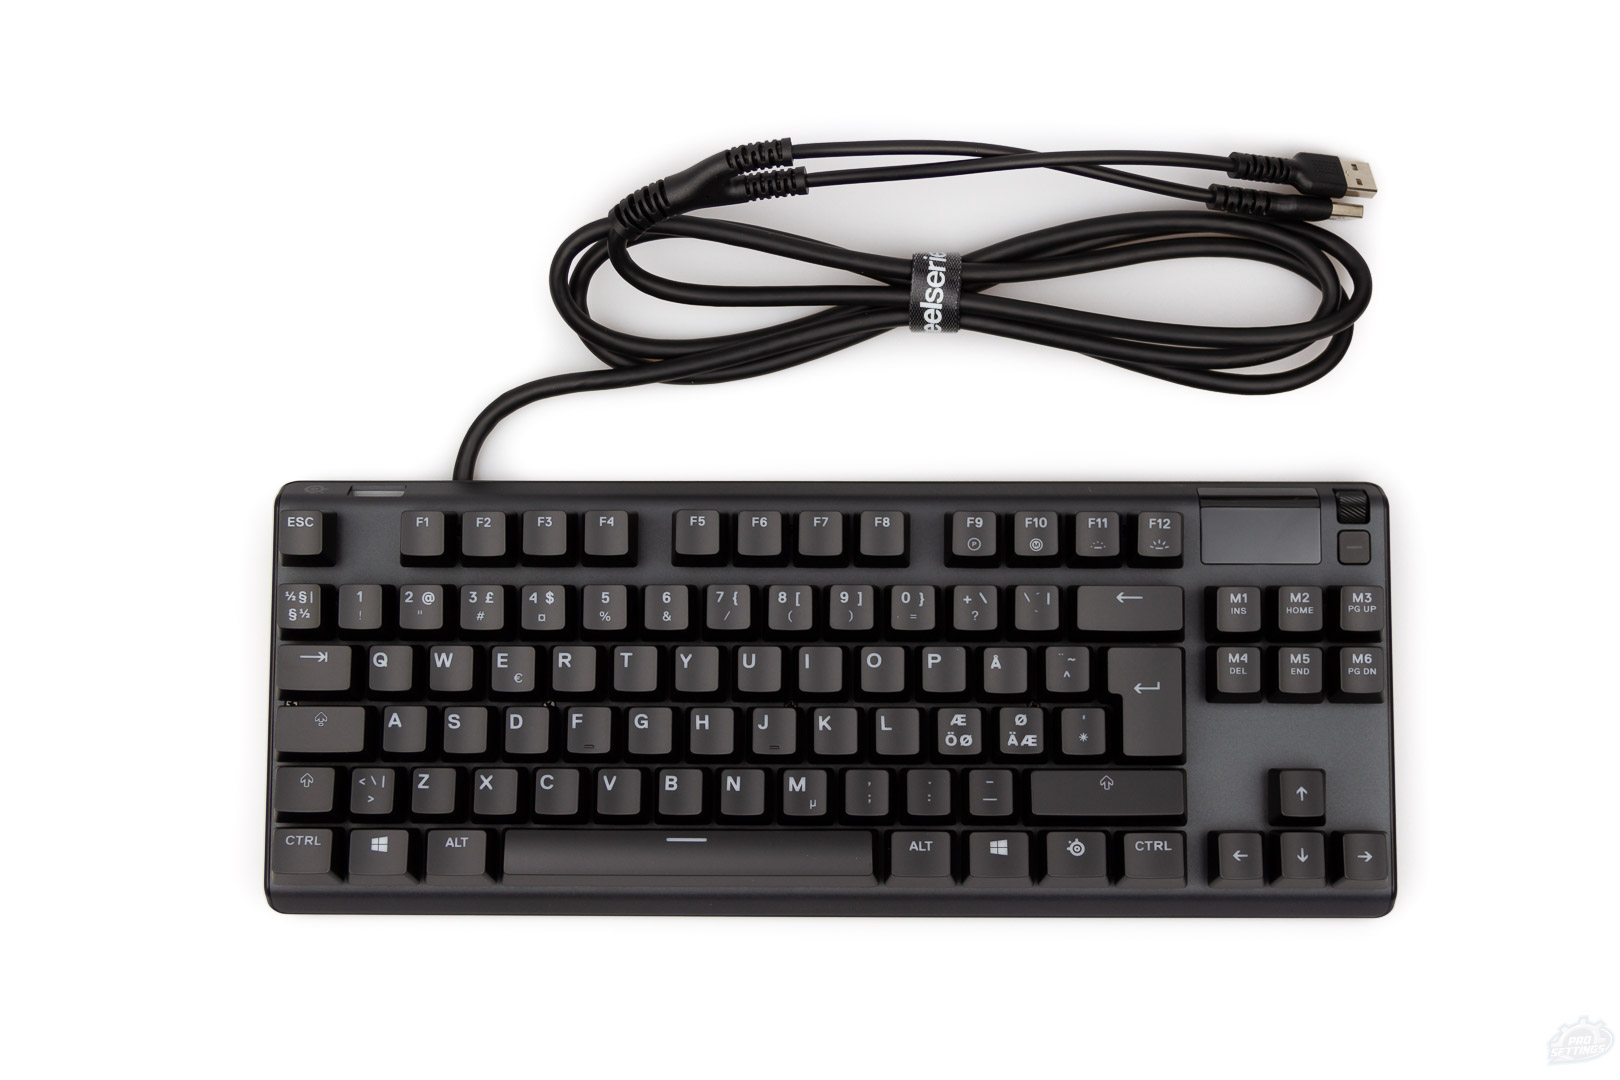 Steelseries Apex Pro Tkl Mechanical Gaming Keyboard Review Prosettings Com